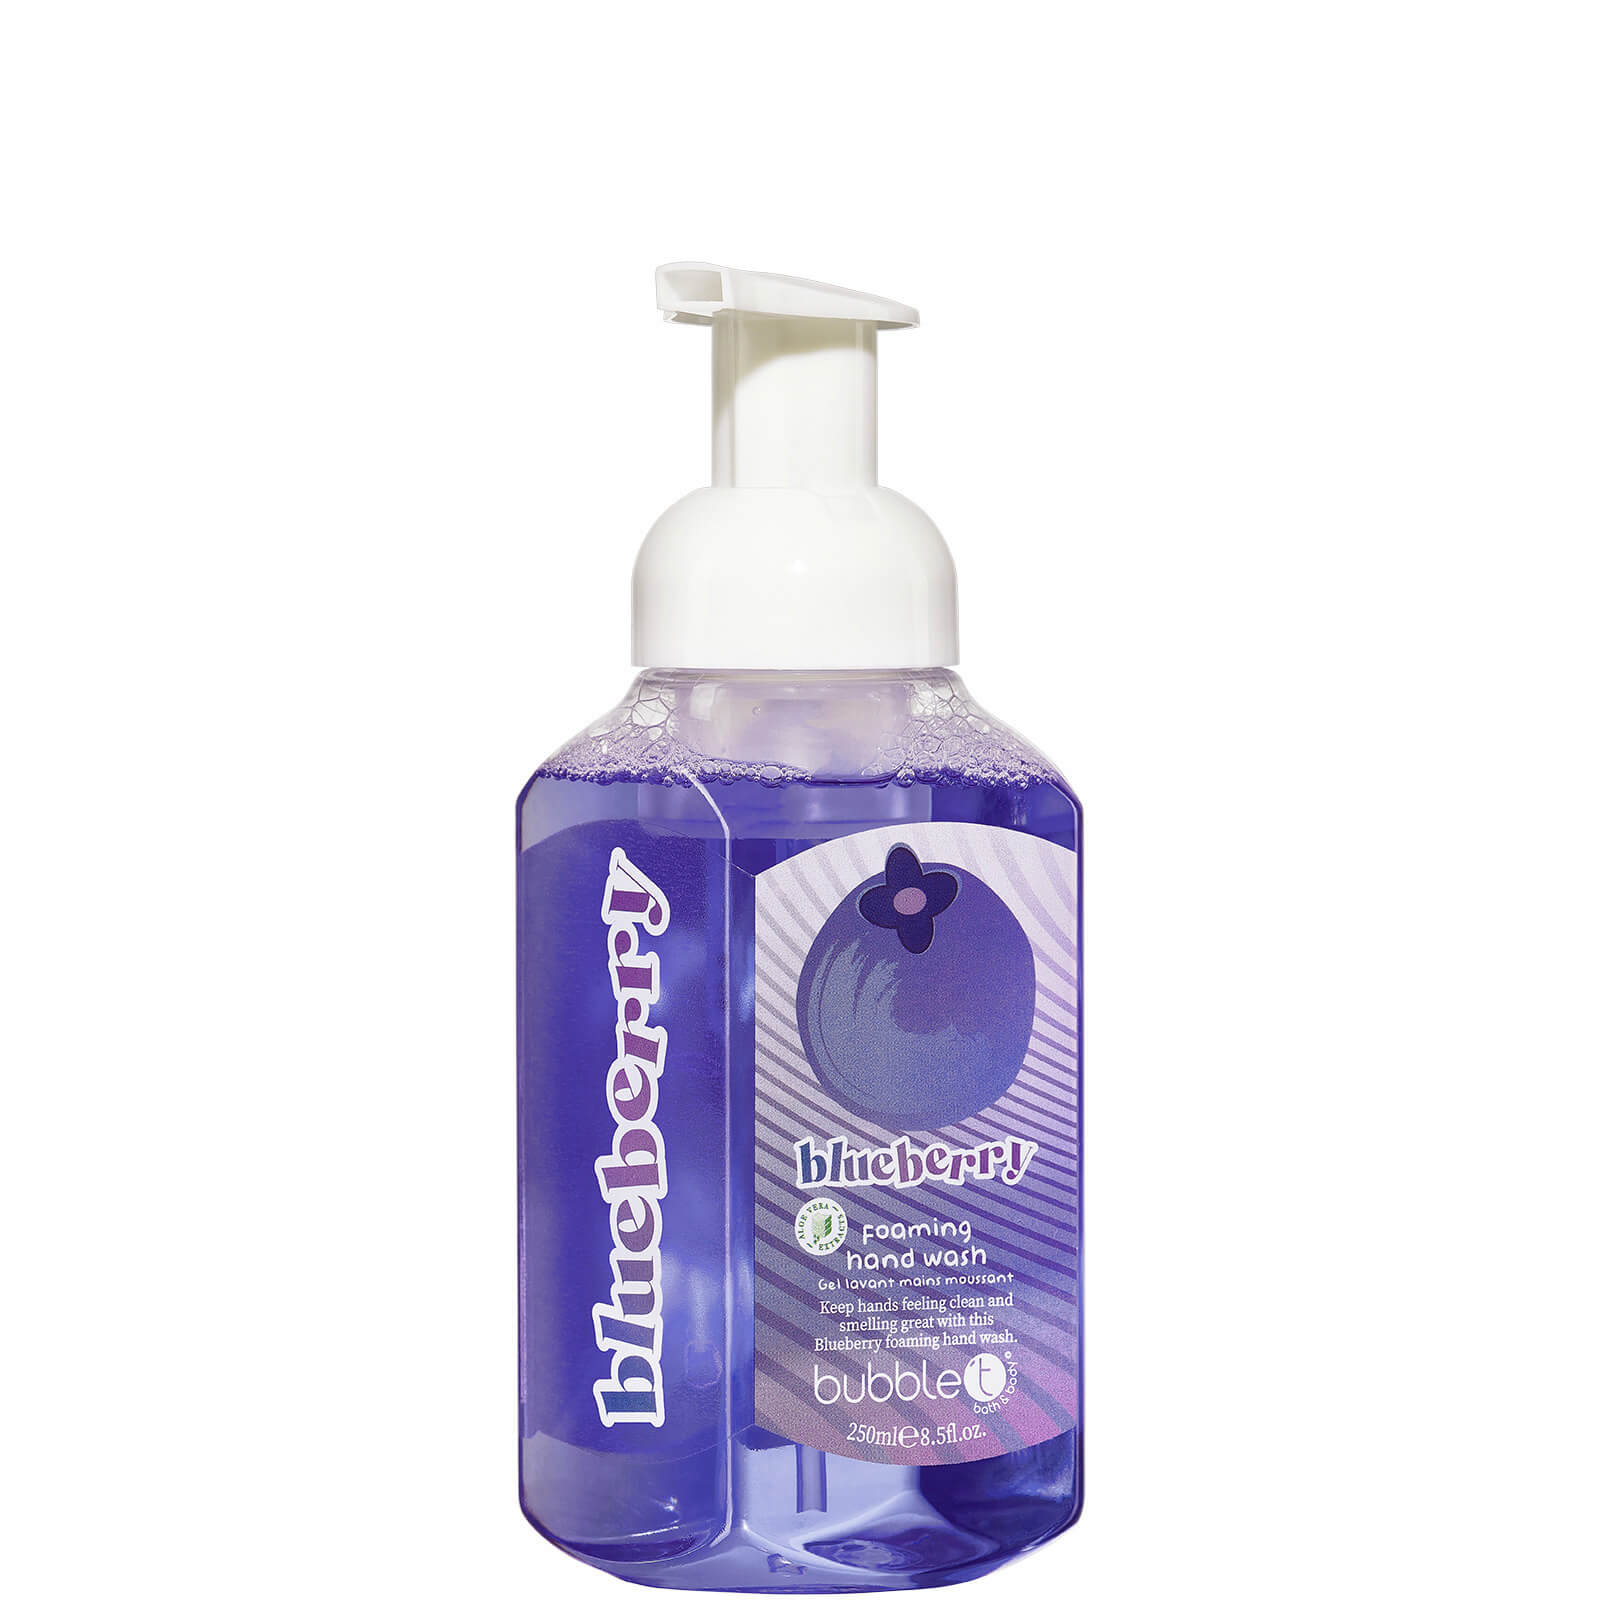 Bubble T Foaming Hand Wash - Blueberry 250ml